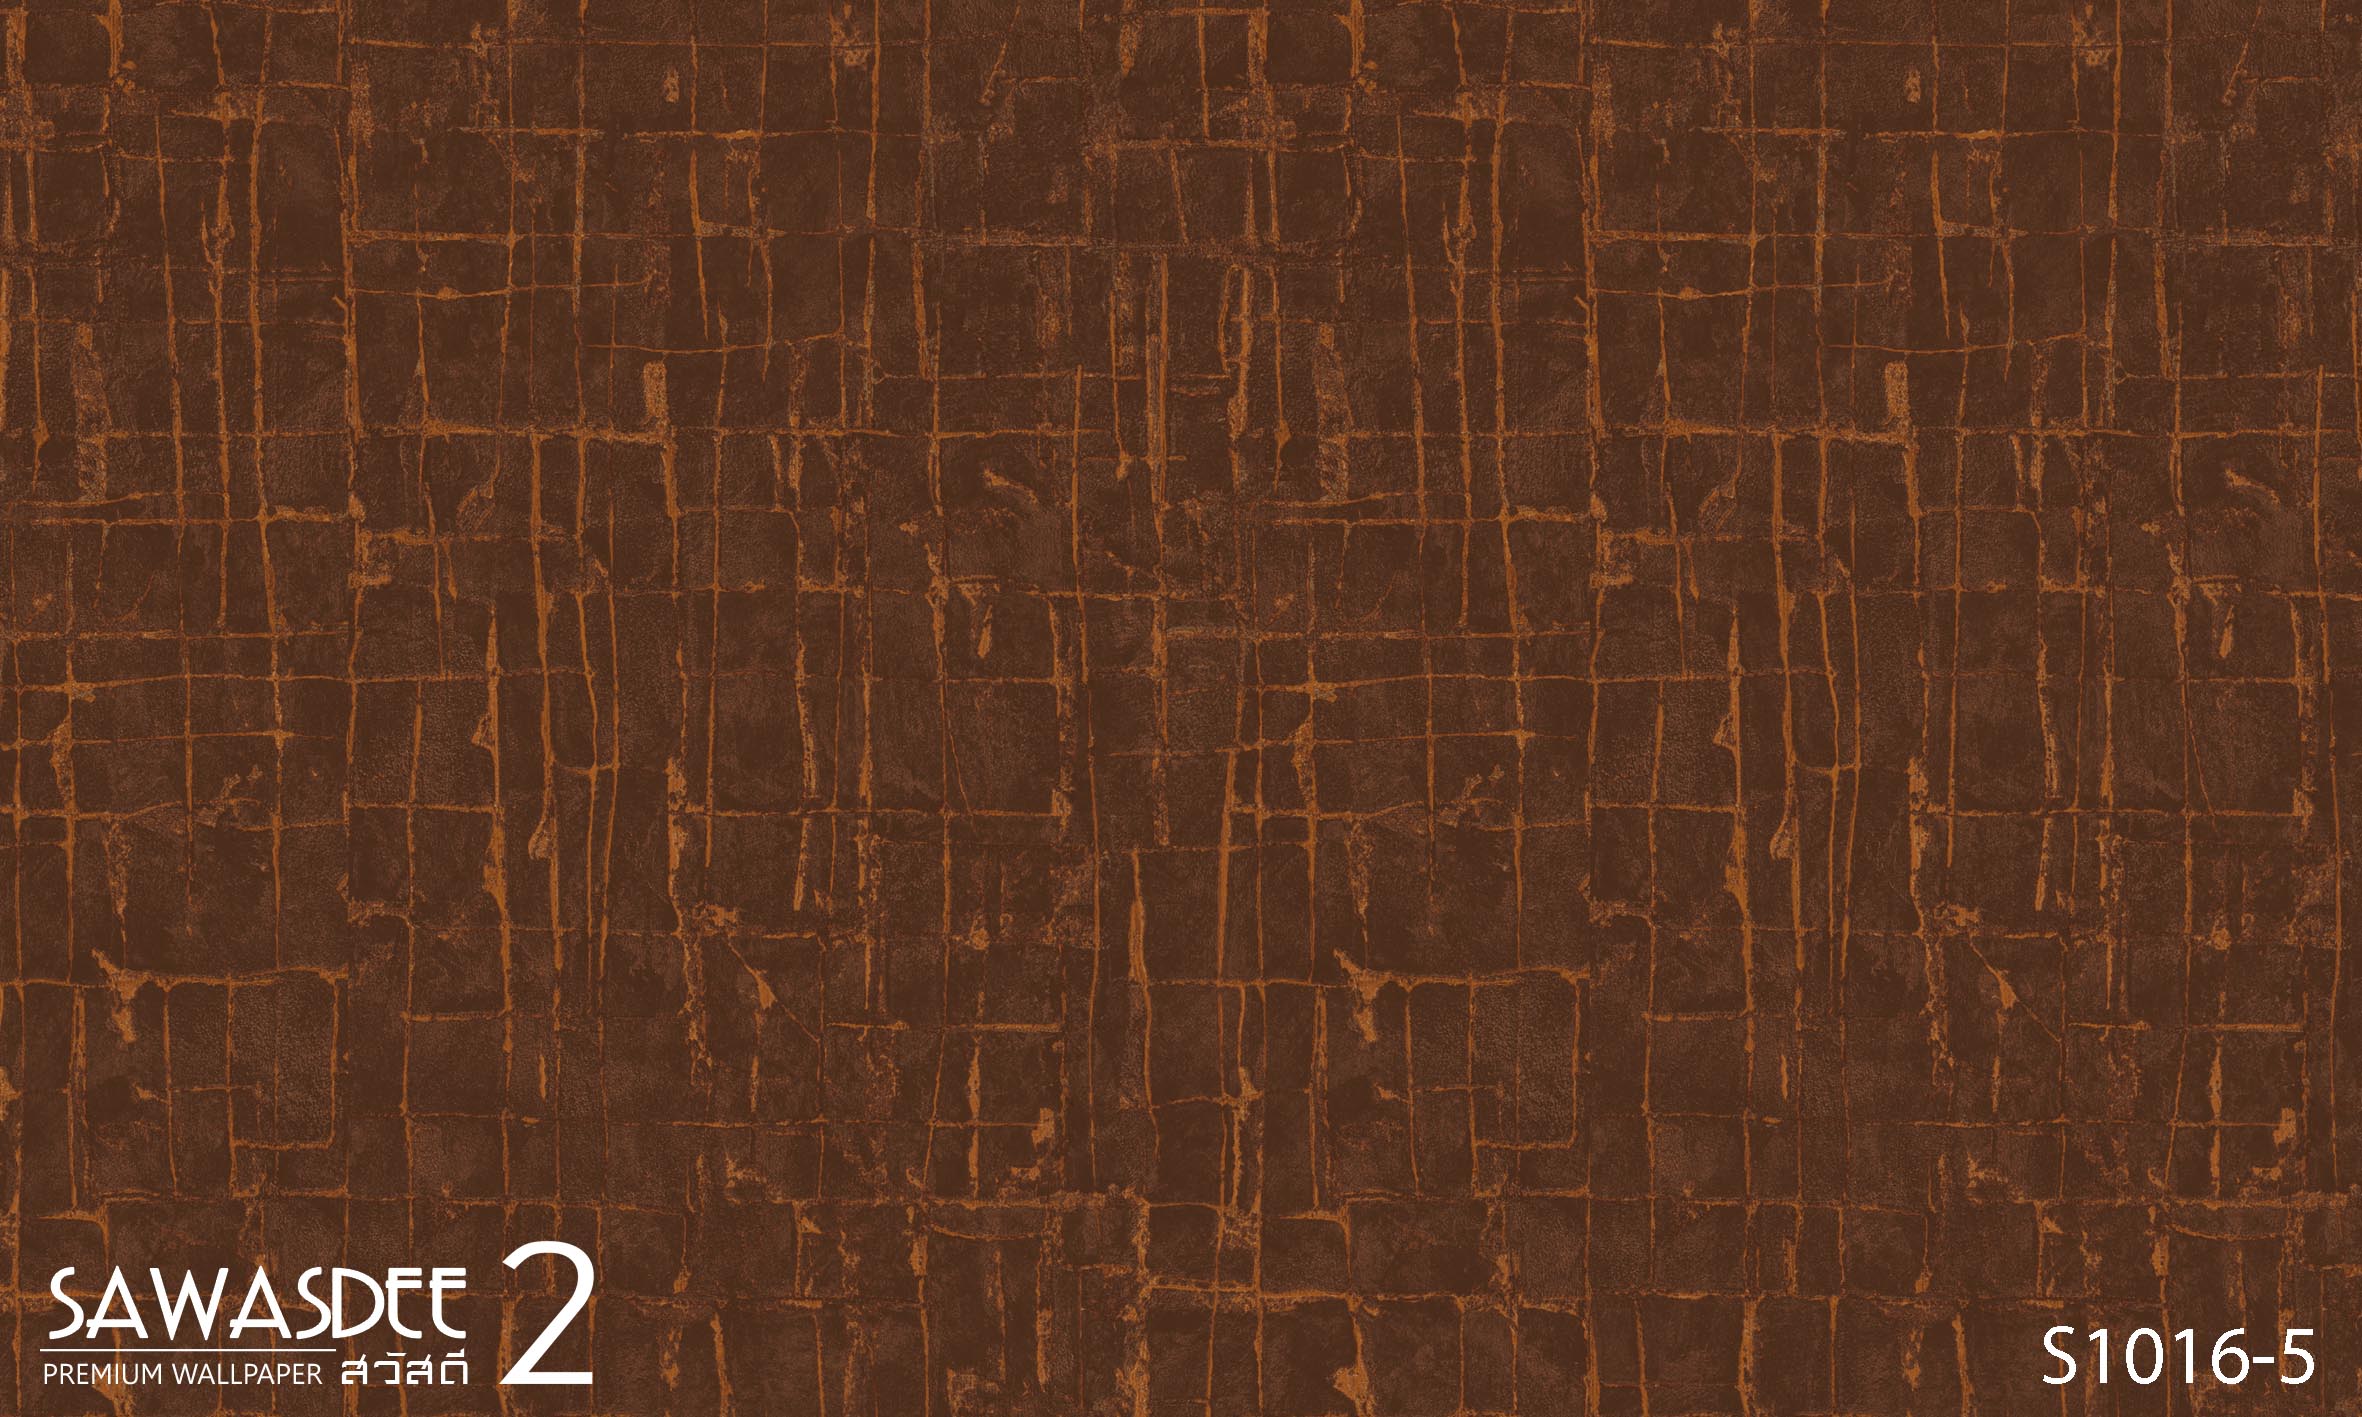 Wallpaper (SAWASDEE 2) S1016-5